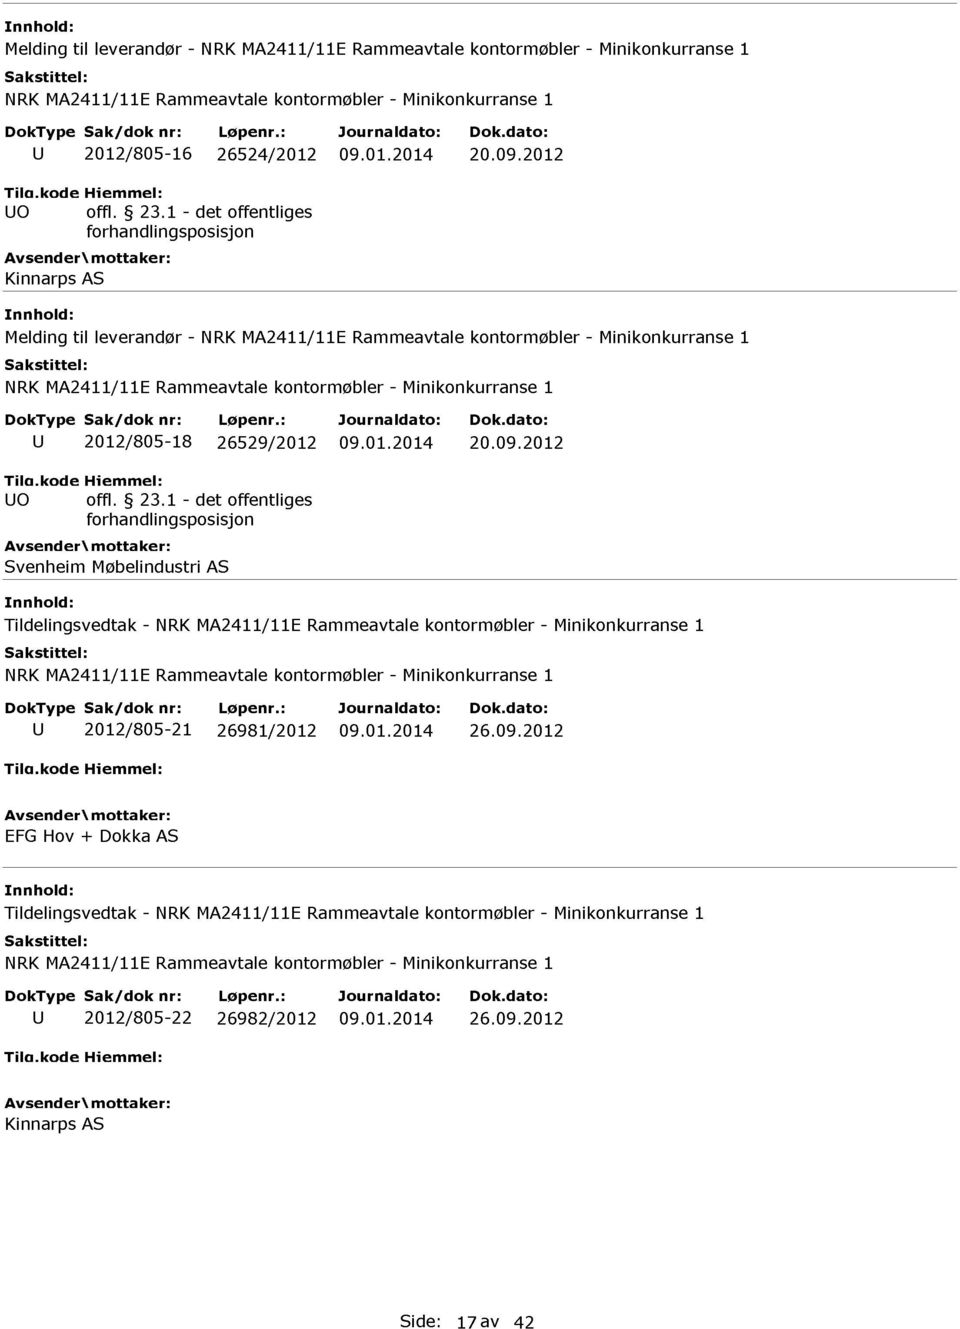 2012 Kinnarps AS Melding til leverandør - NRK MA2411/11E Rammeavtale kontormøbler - Minikonkurranse 1 NRK MA2411/11E Rammeavtale kontormøbler - Minikonkurranse 1 2012/805-18 26529/2012 09.